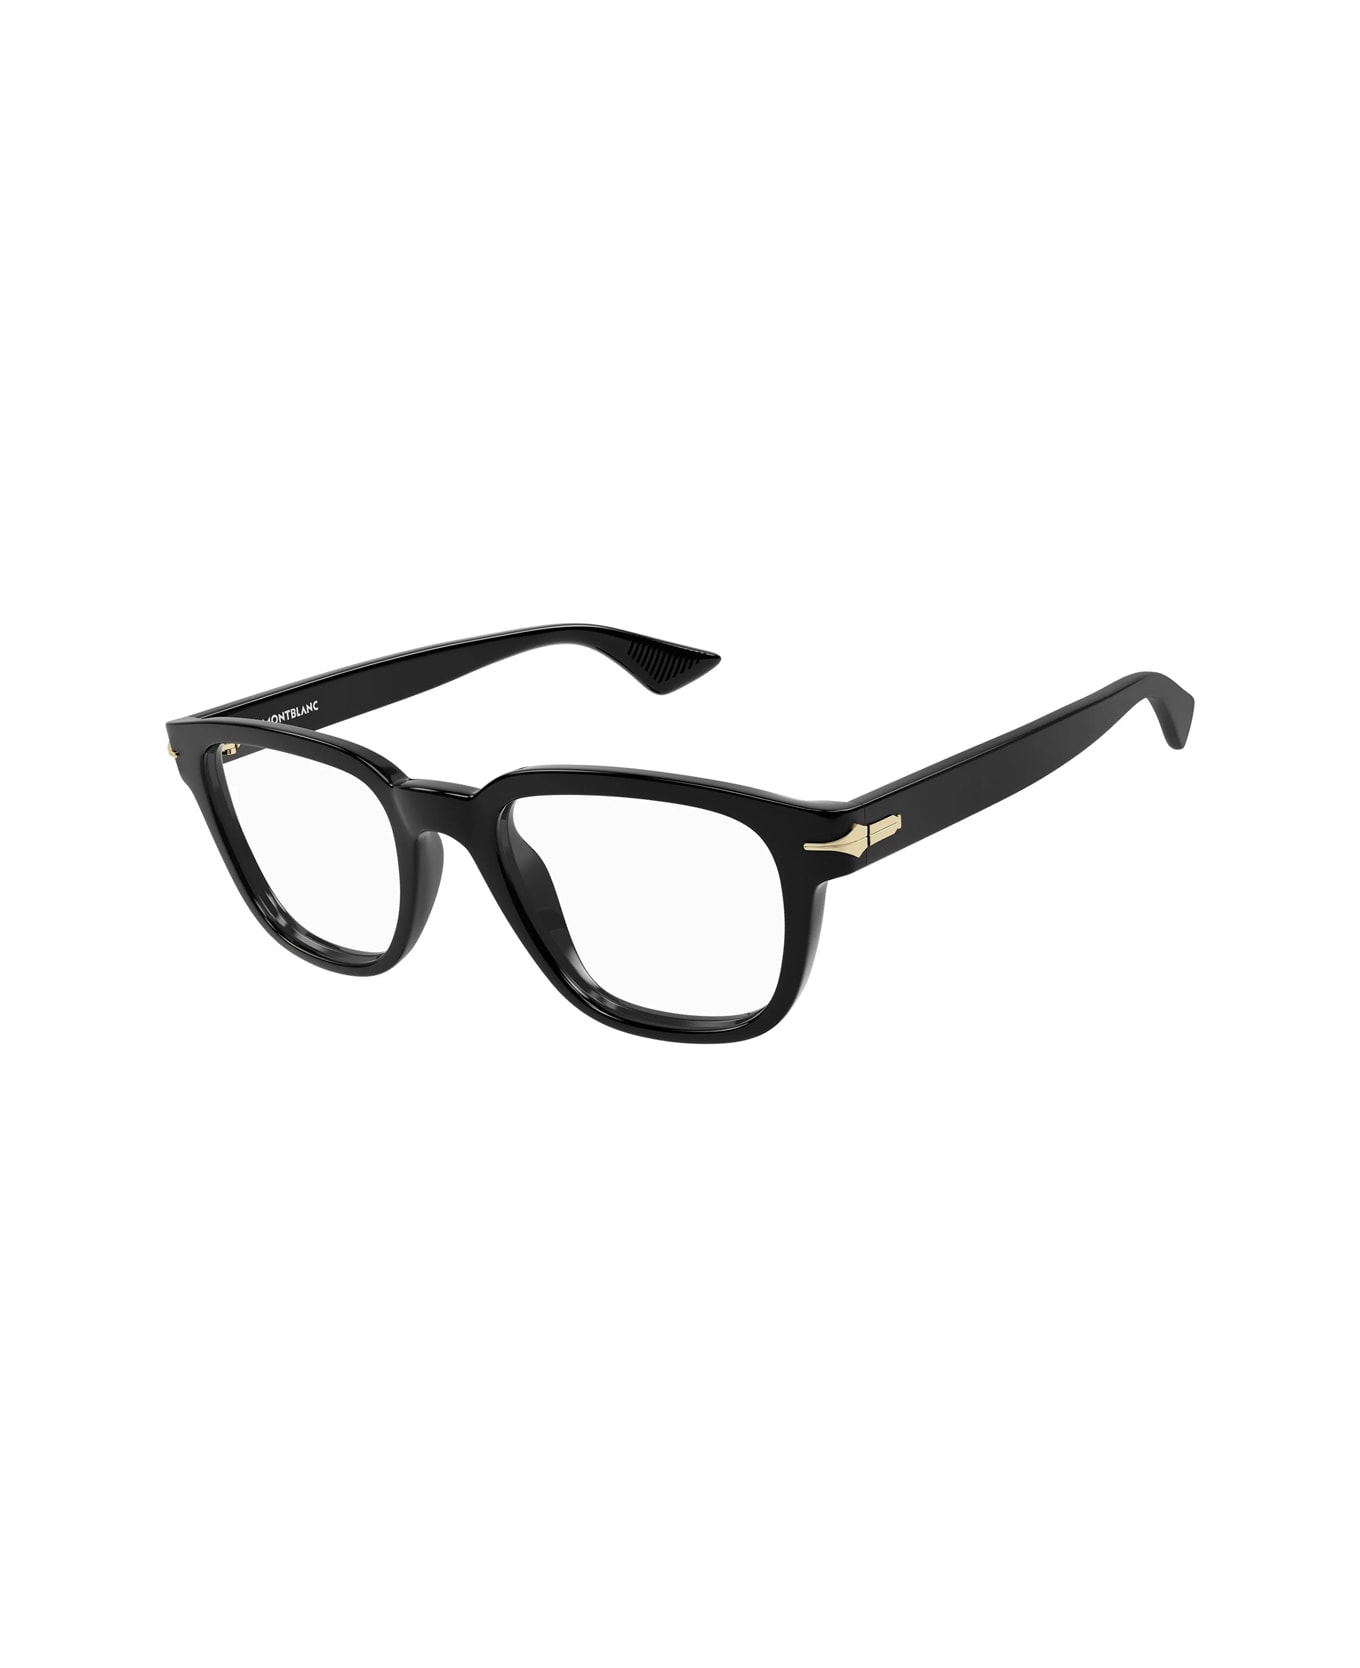 Montblanc Mb0305o 001 Glasses - Nero